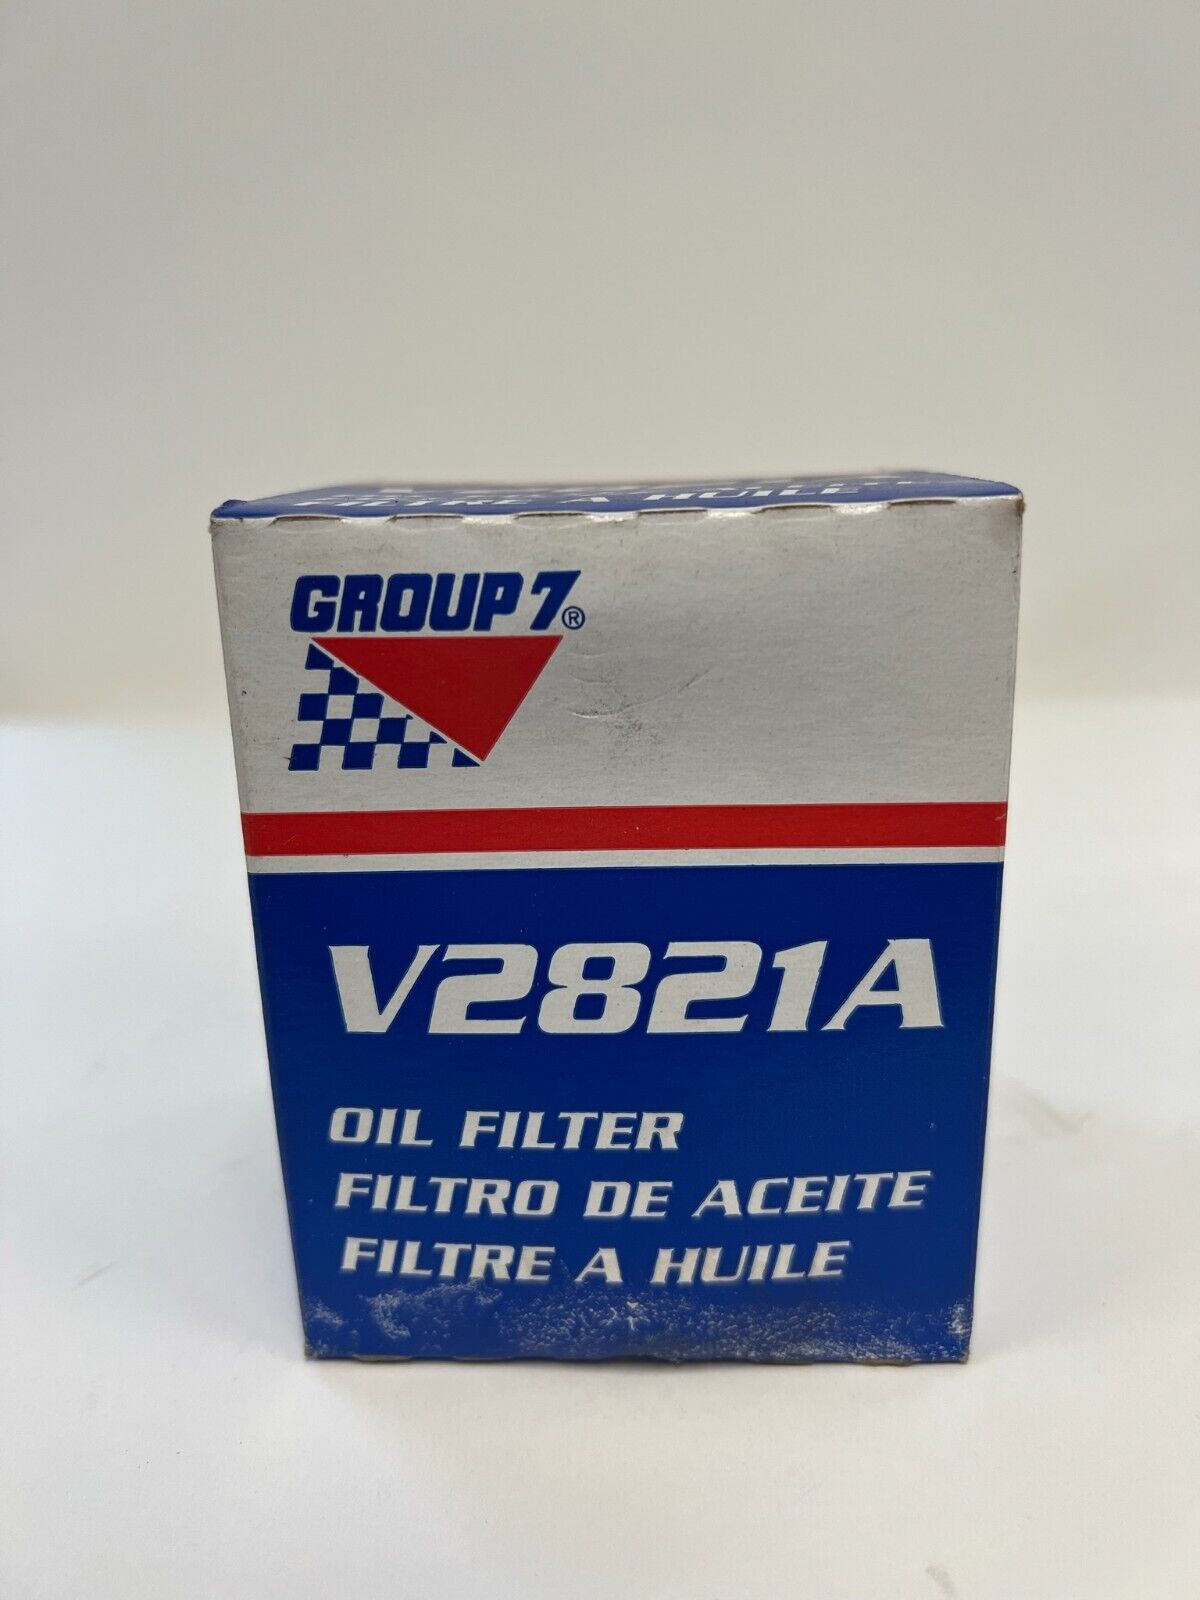 Group 7 V2821A Oil Filter